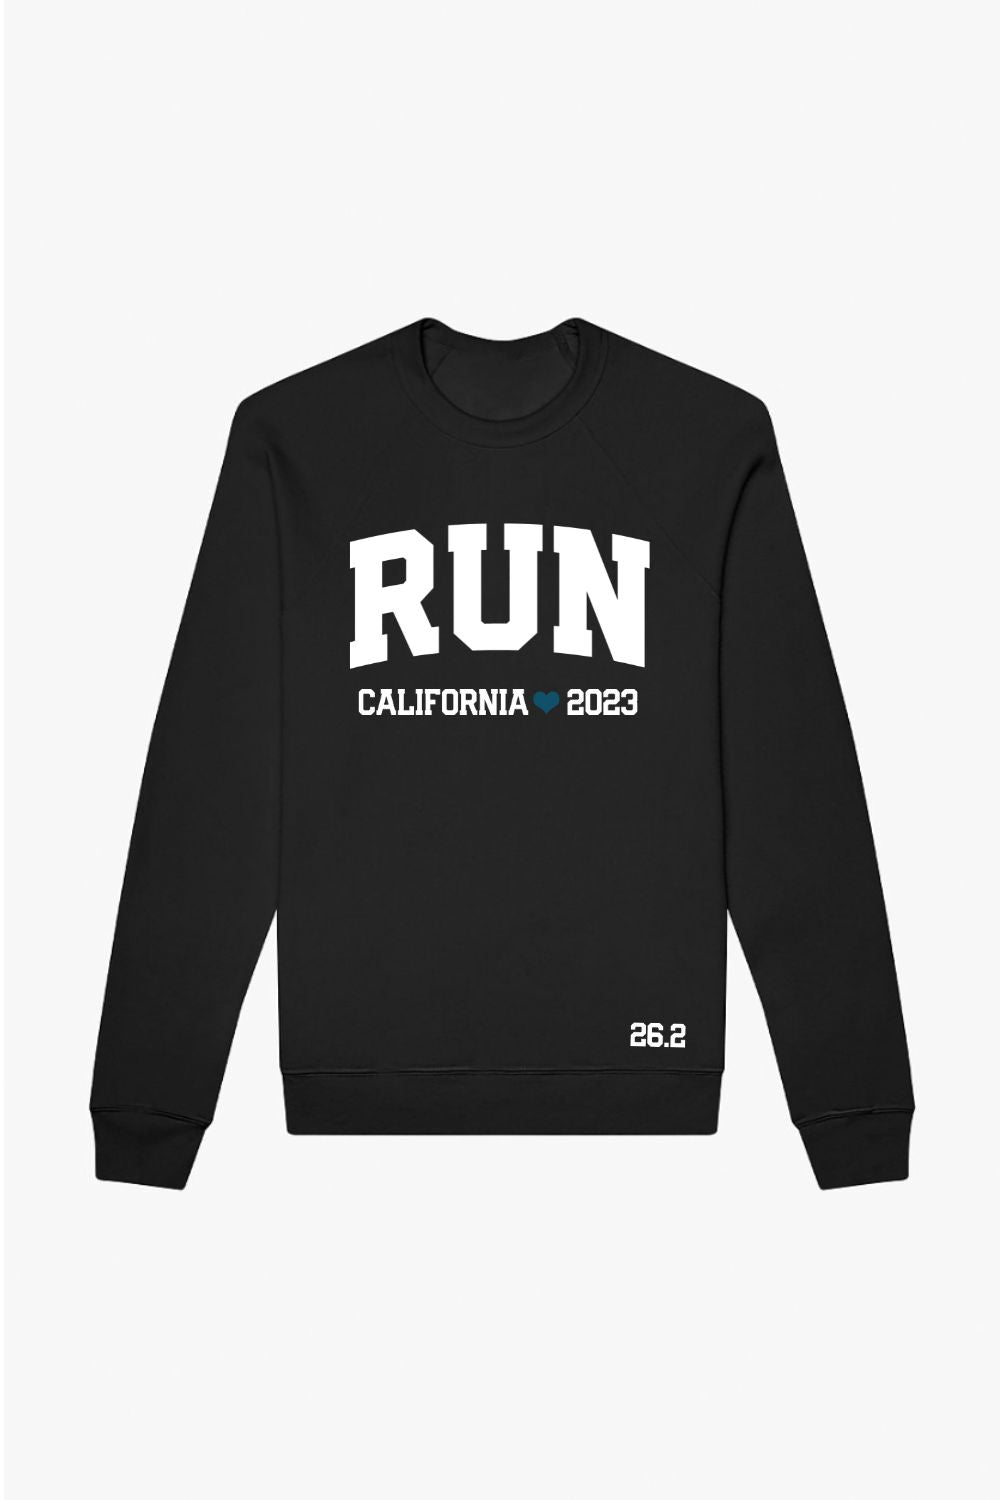 RUN California 2023 Sweatshirt